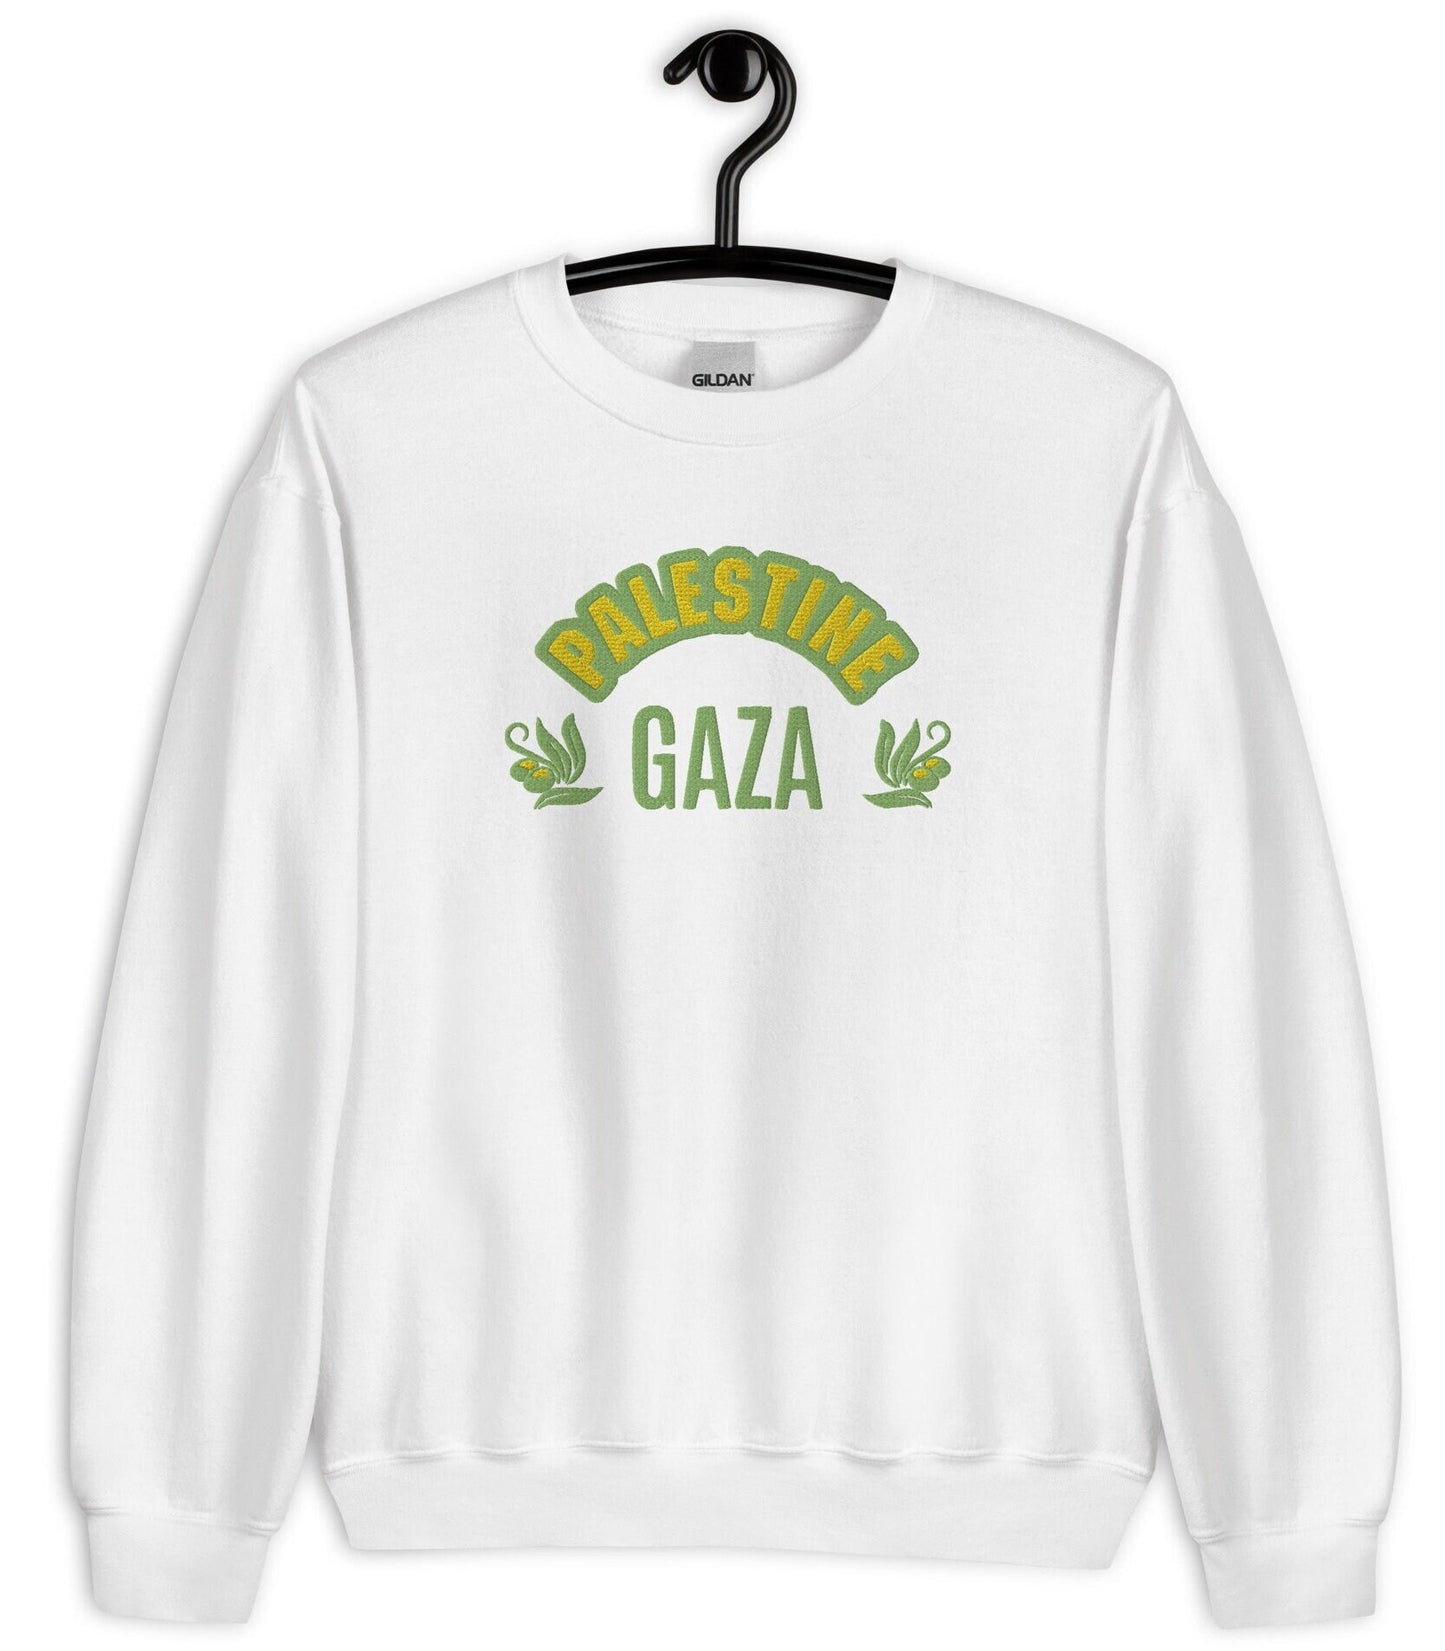 Embroidered Gaza Sweatshirt, Embrodered Palestine Sweater